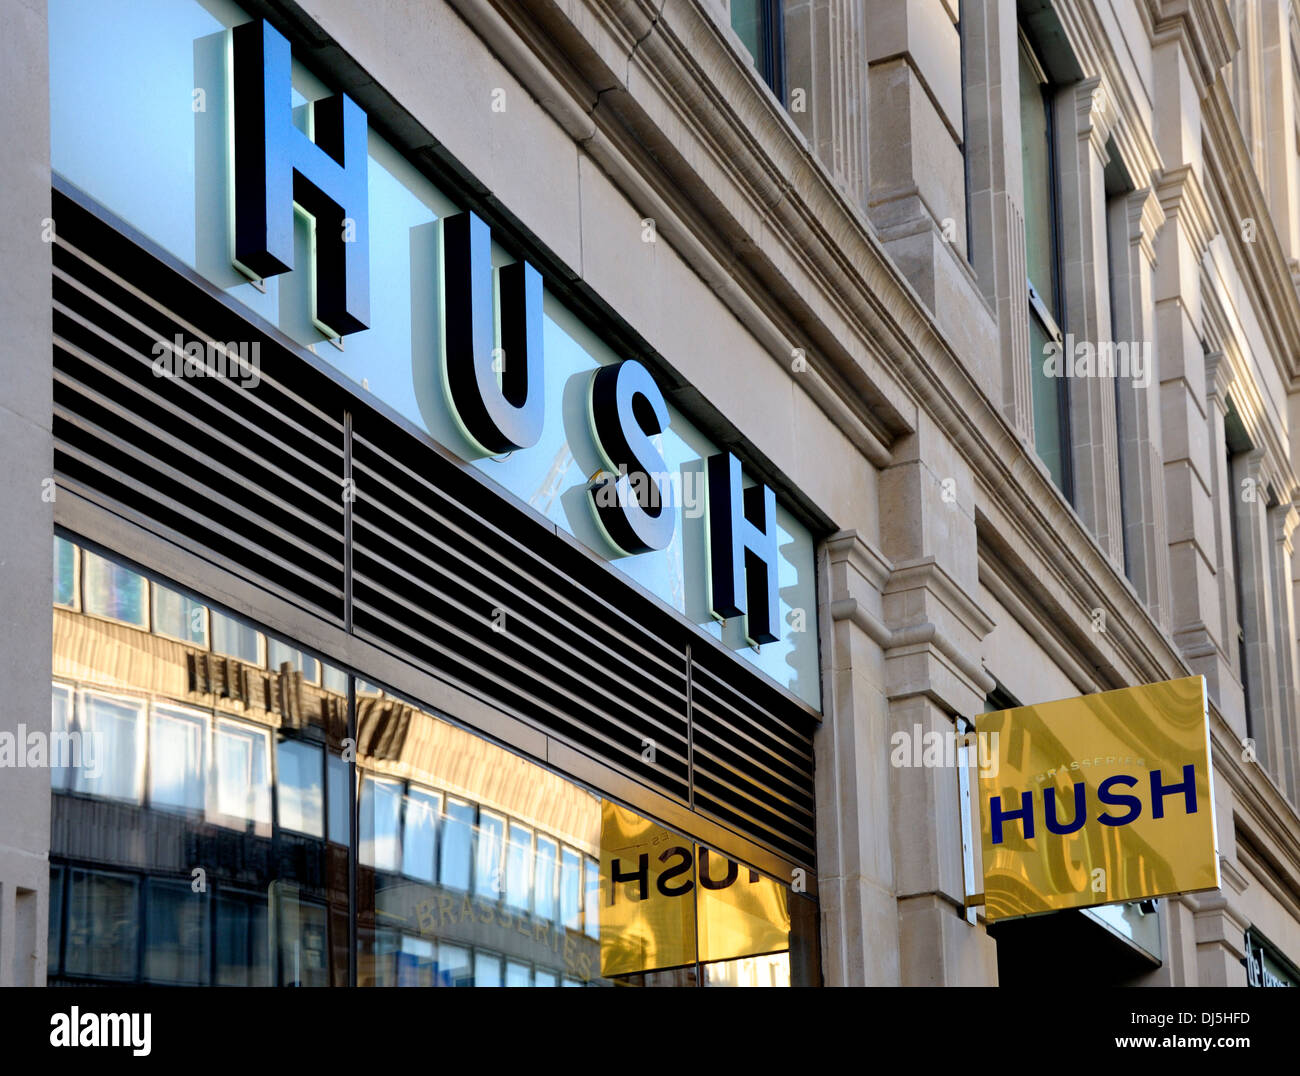 Londres, Angleterre, Royaume-Uni. Façade brasserie Hush Banque D'Images